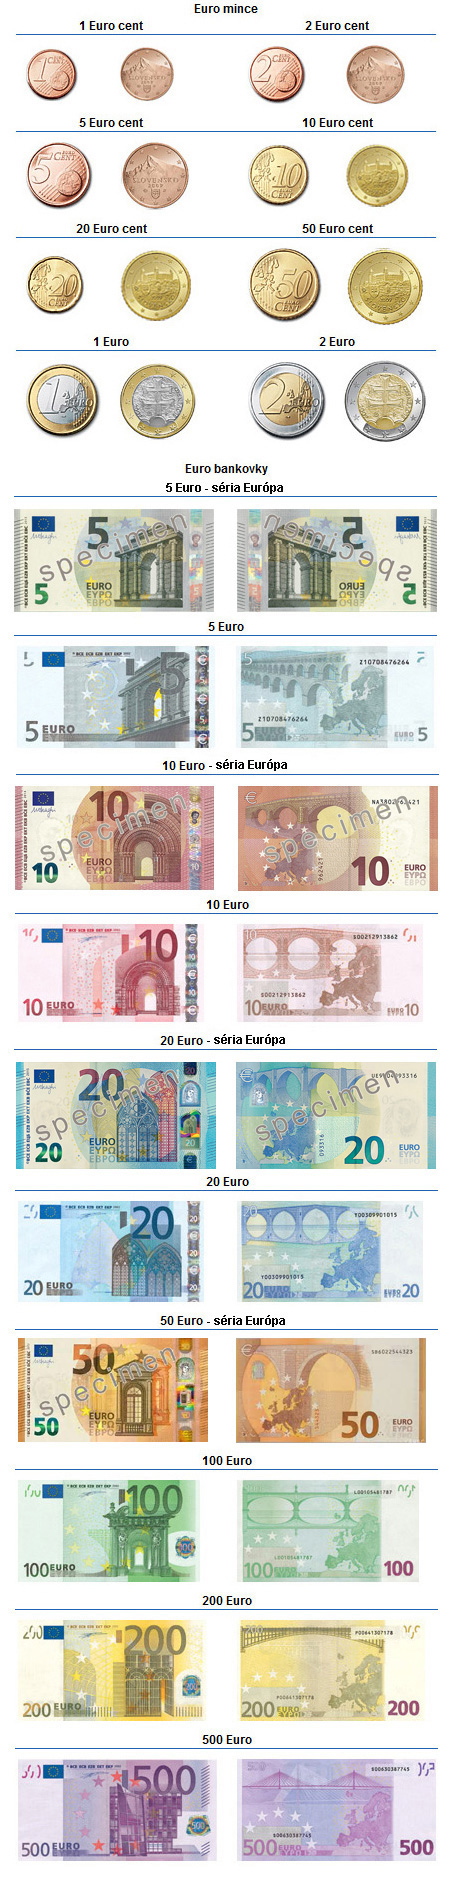 euro_mince